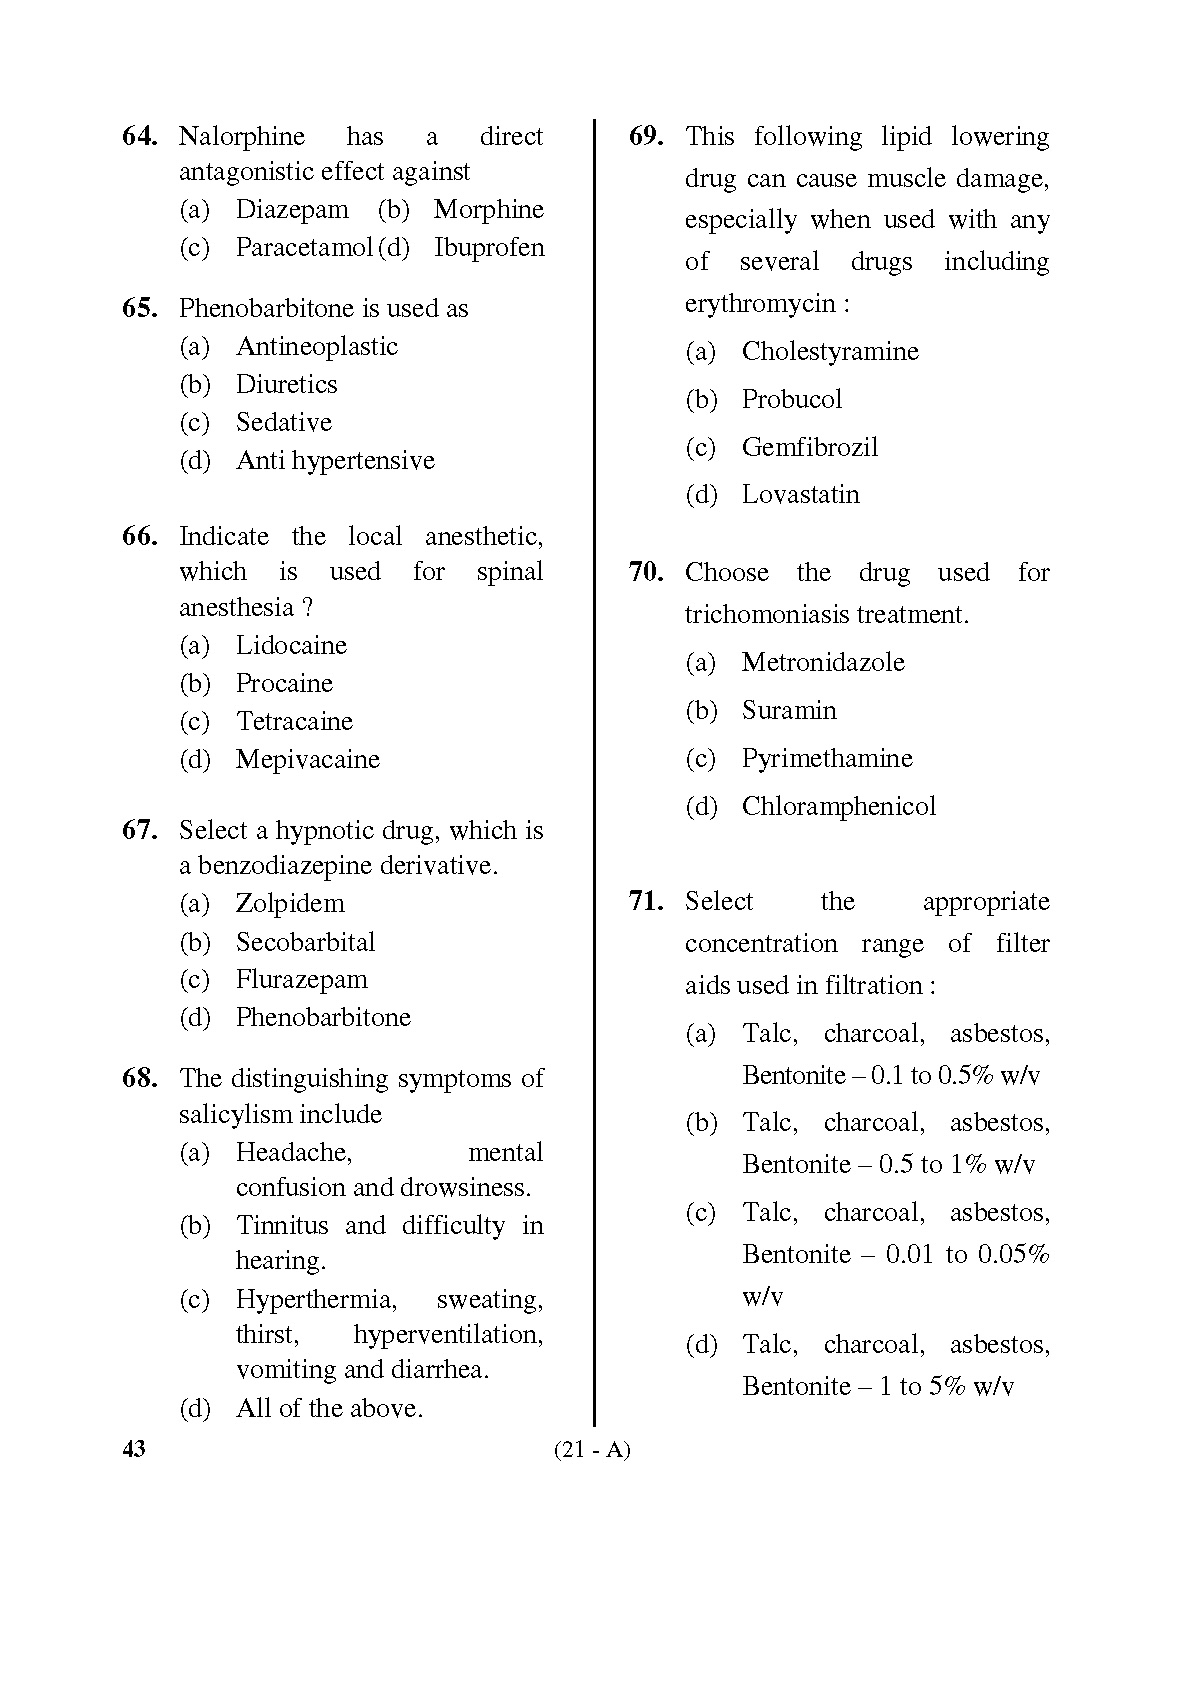 Karnataka PSC Drugs Analyst Pharmacy Exam Sample Question Paper 21